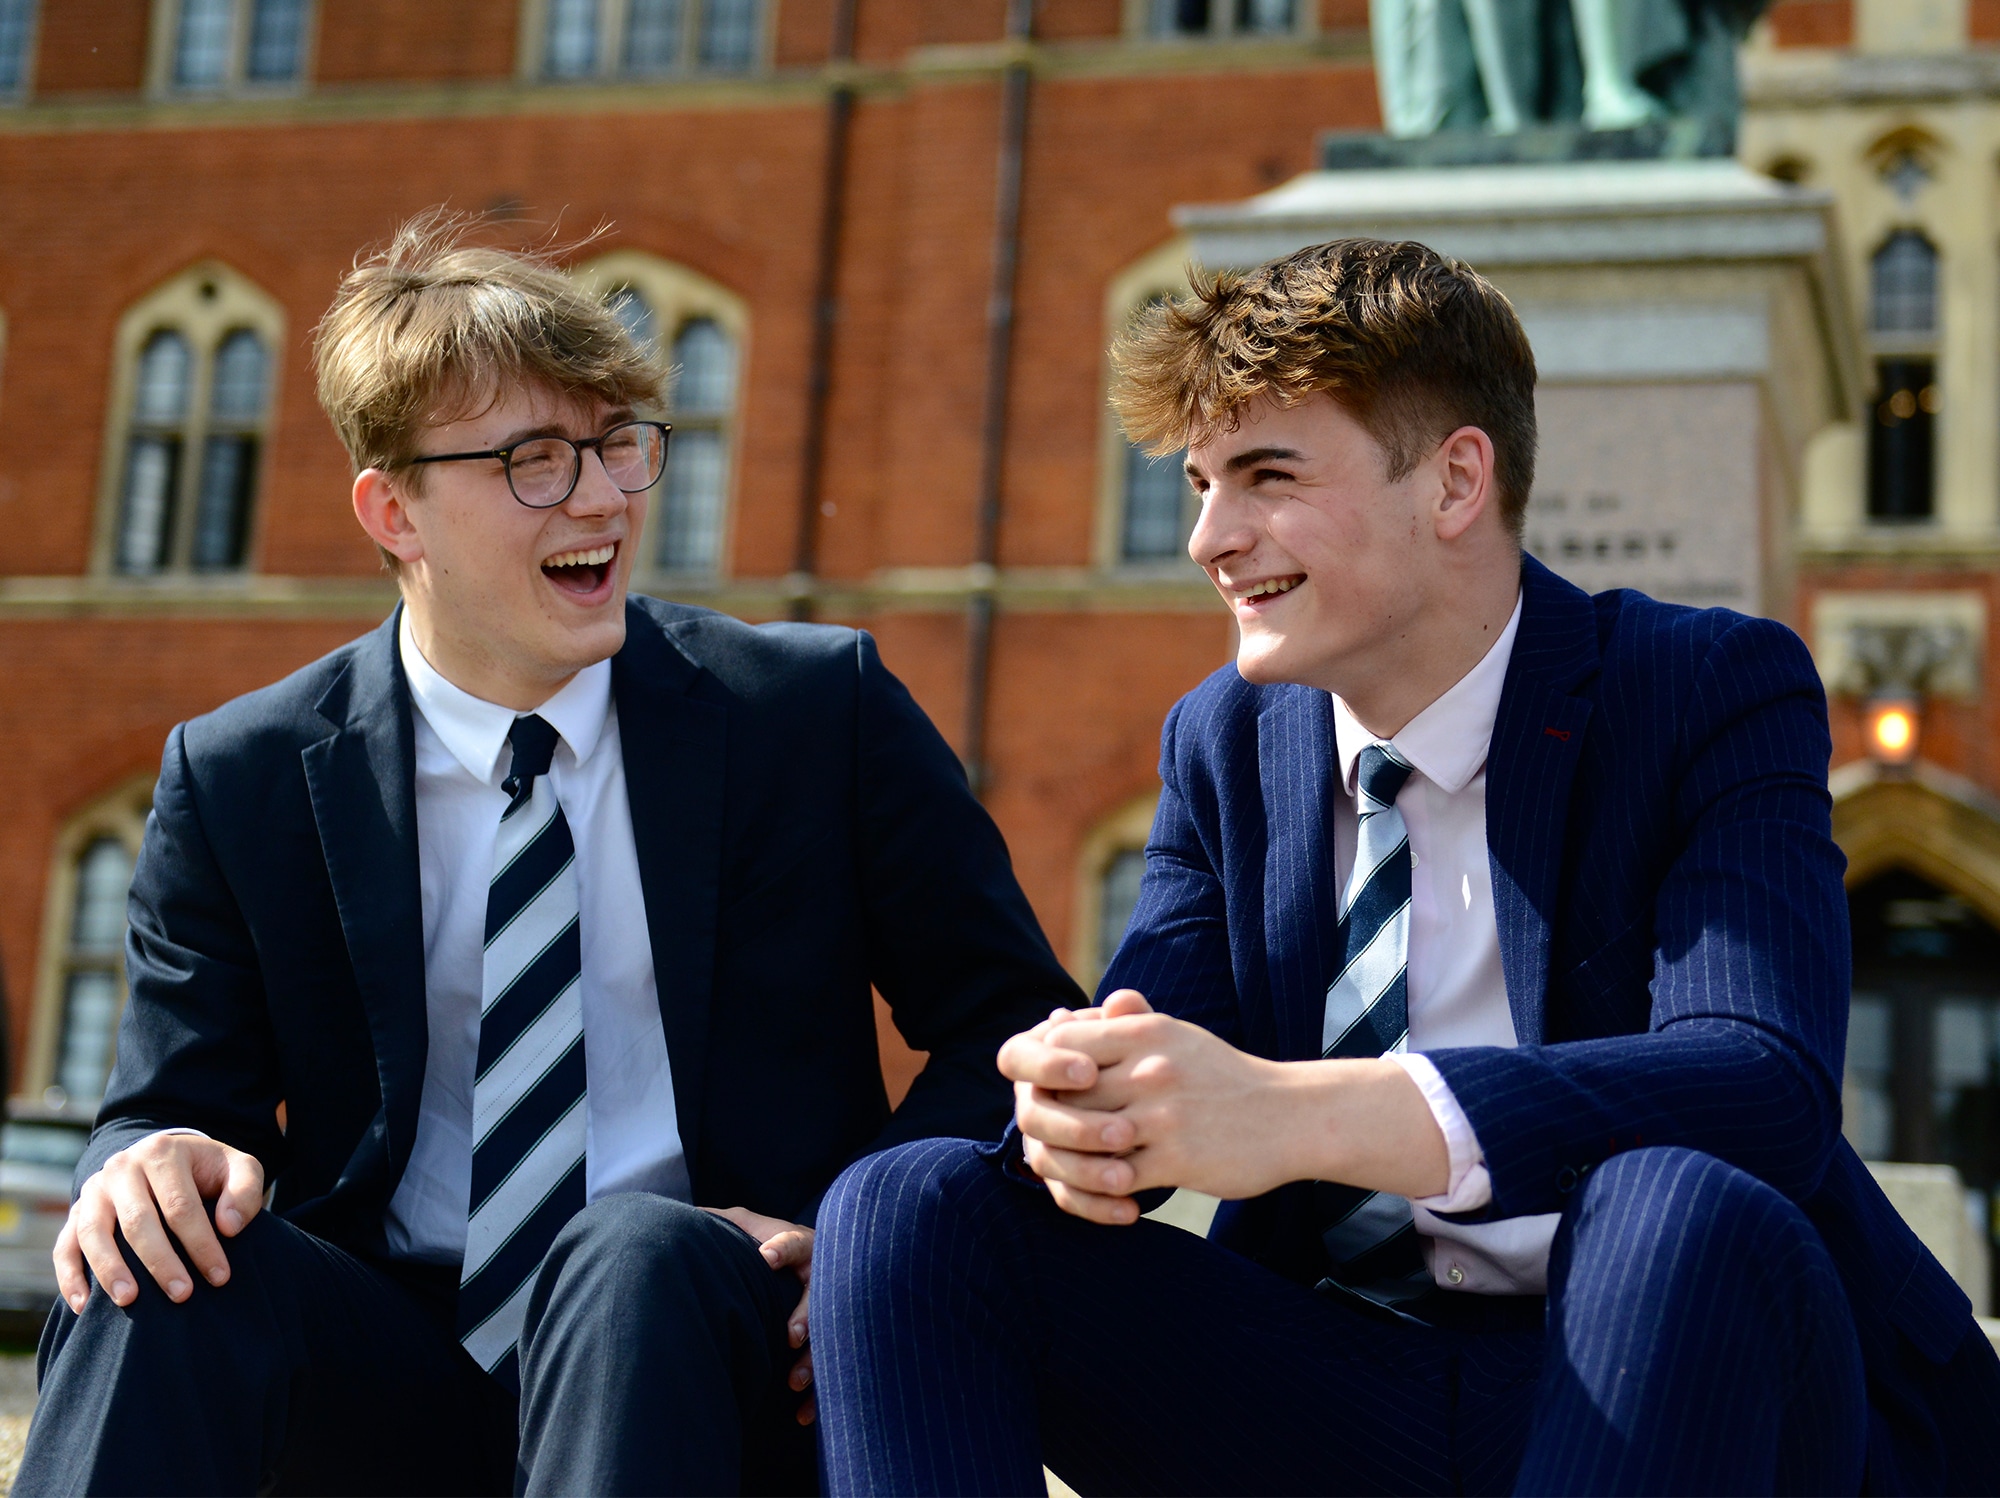 Two Senior school pupils laughing